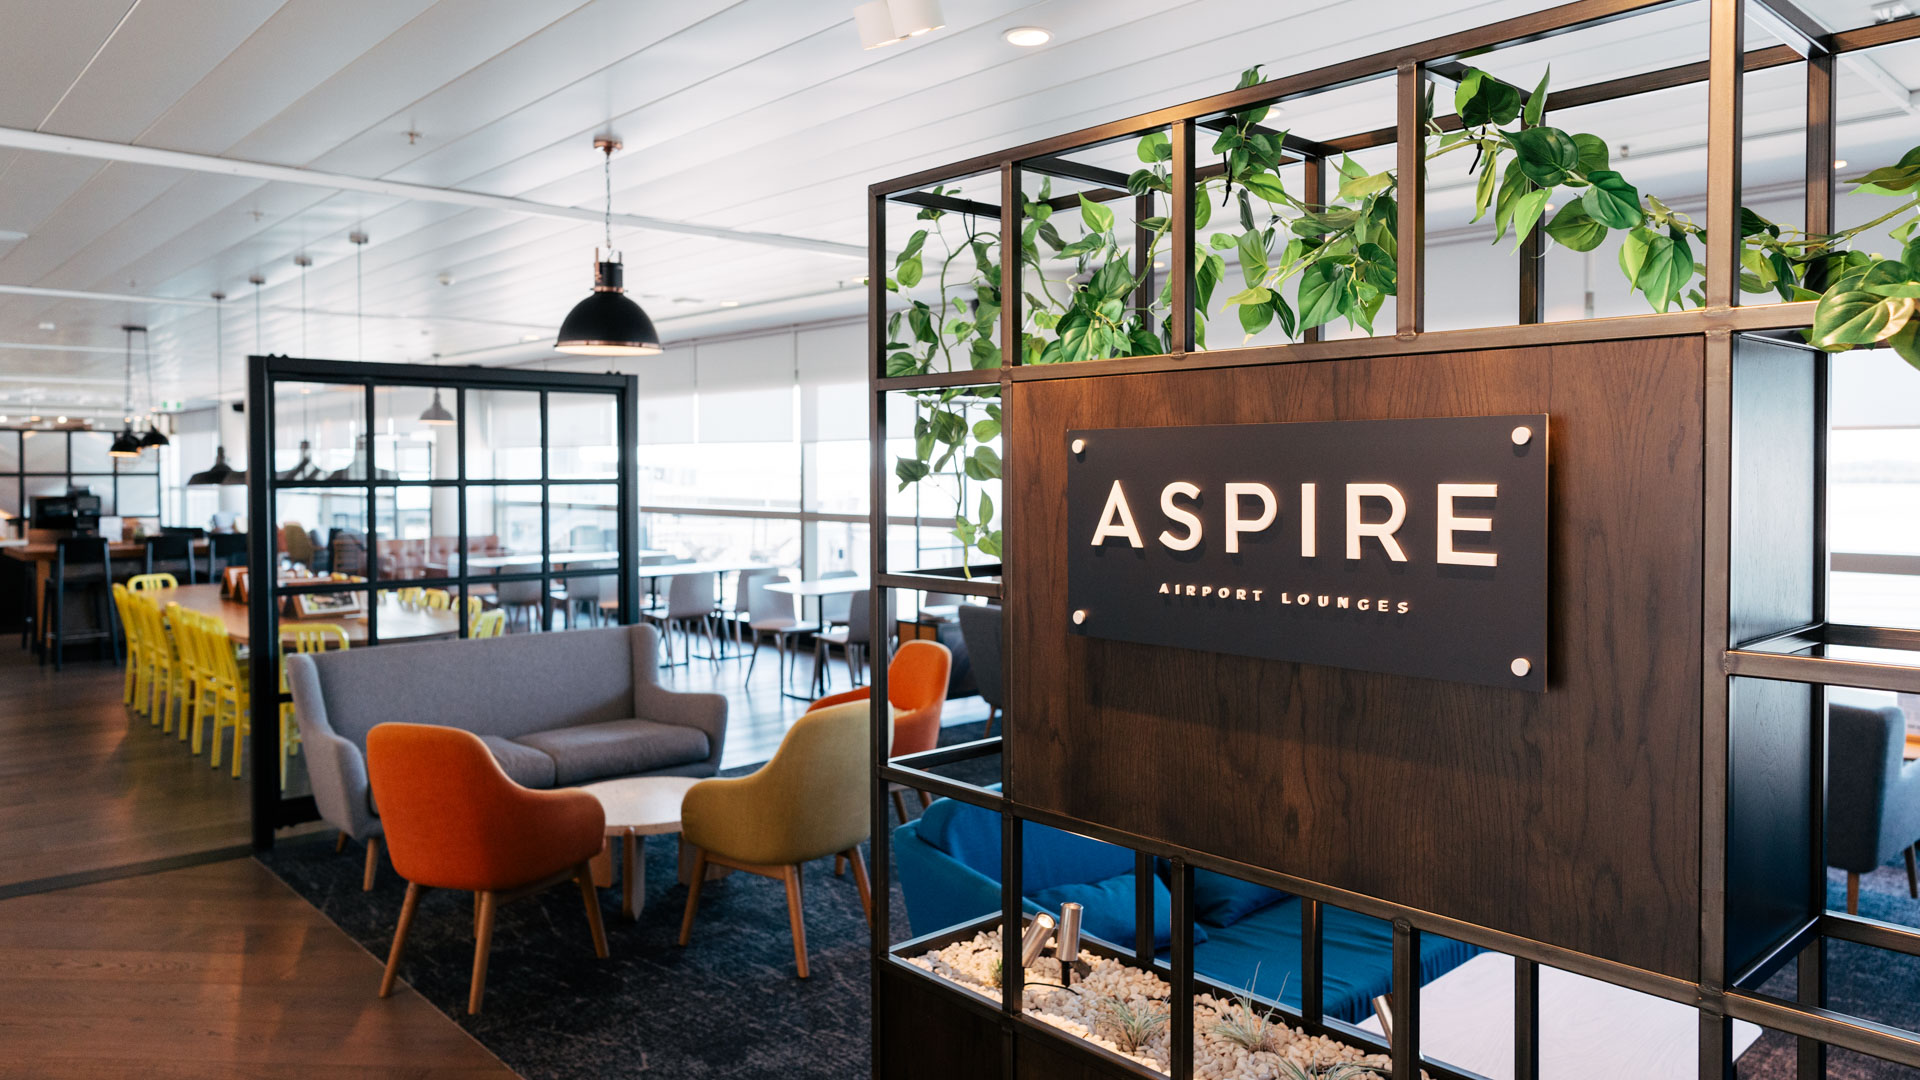 Aspire Lounge Brisbane entrance